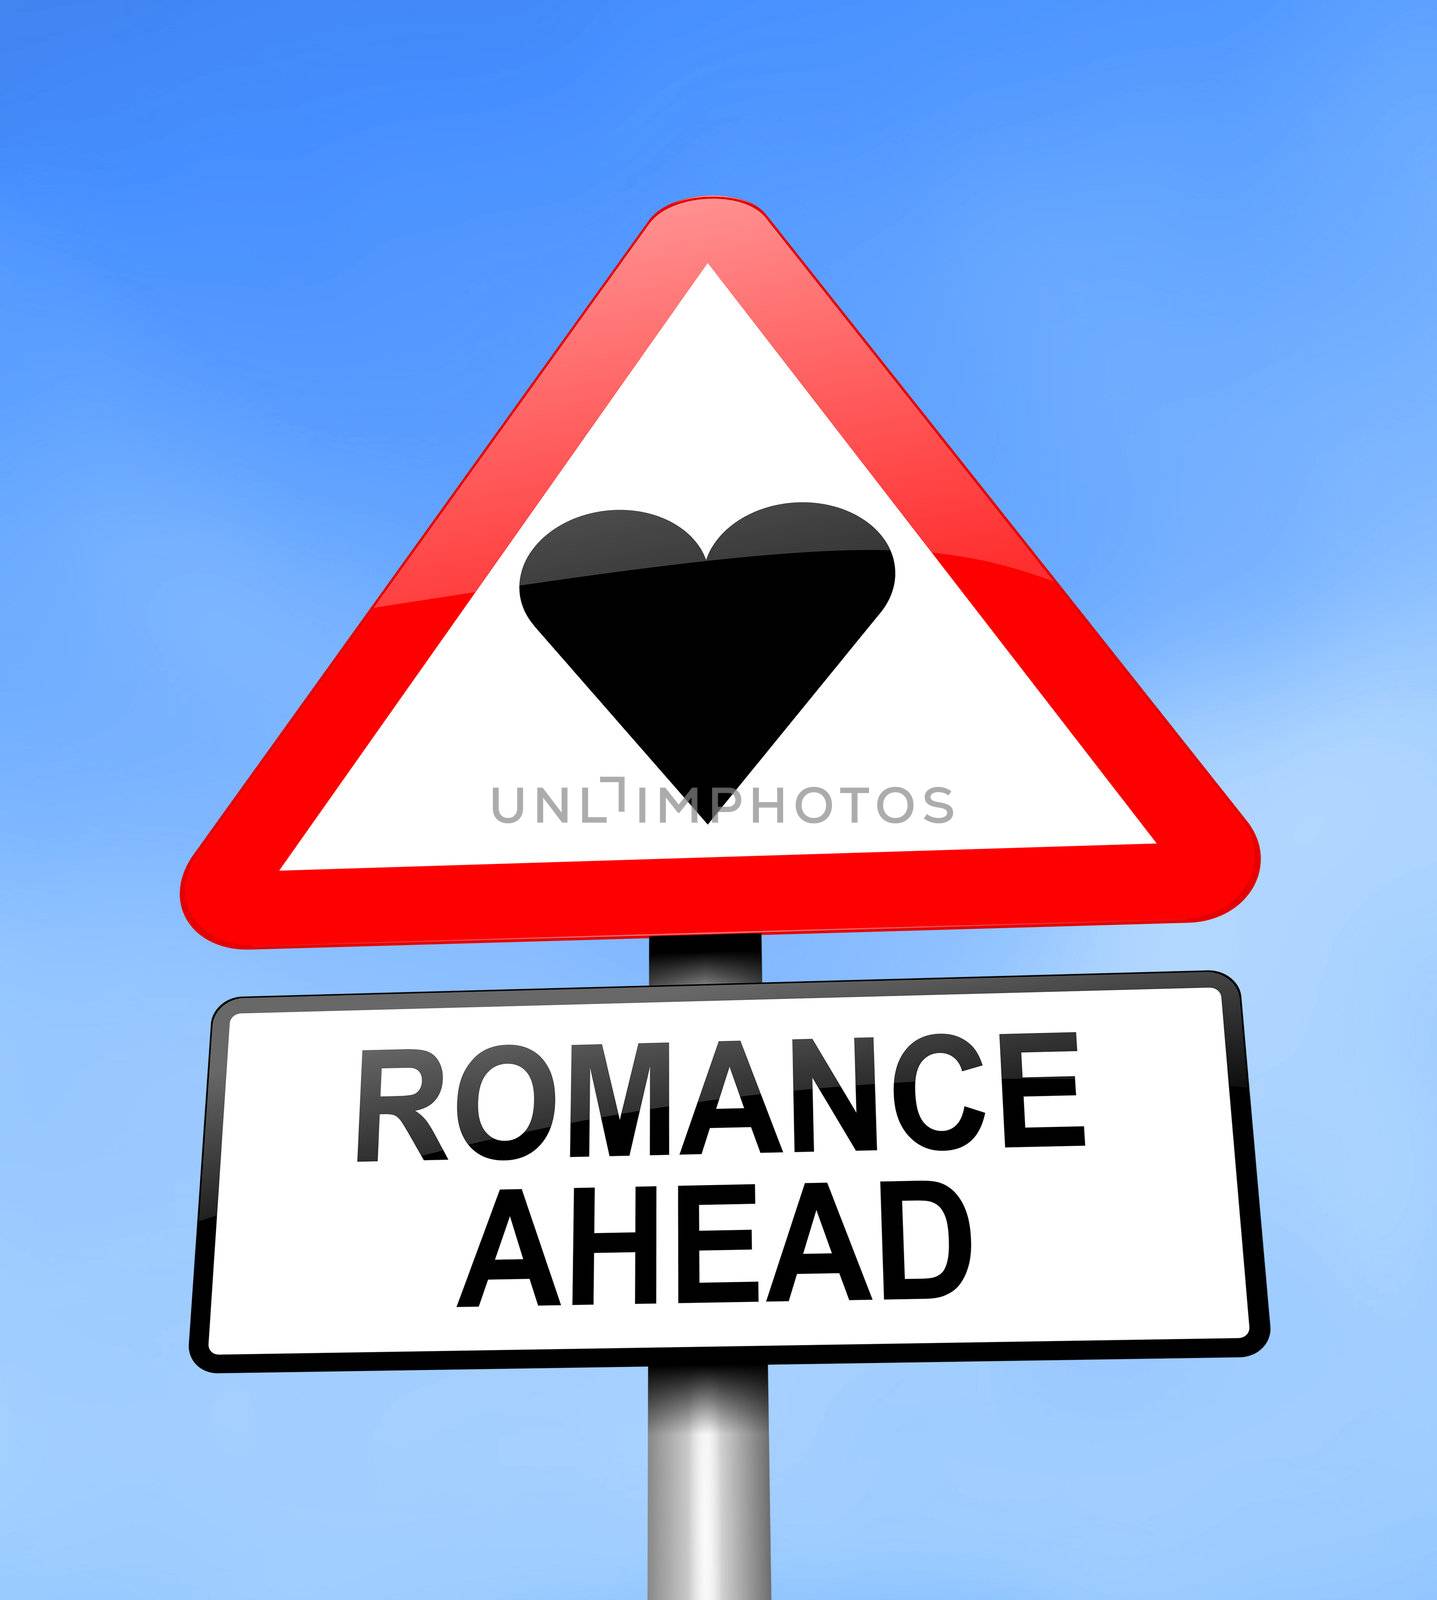 Romance ahead. by 72soul